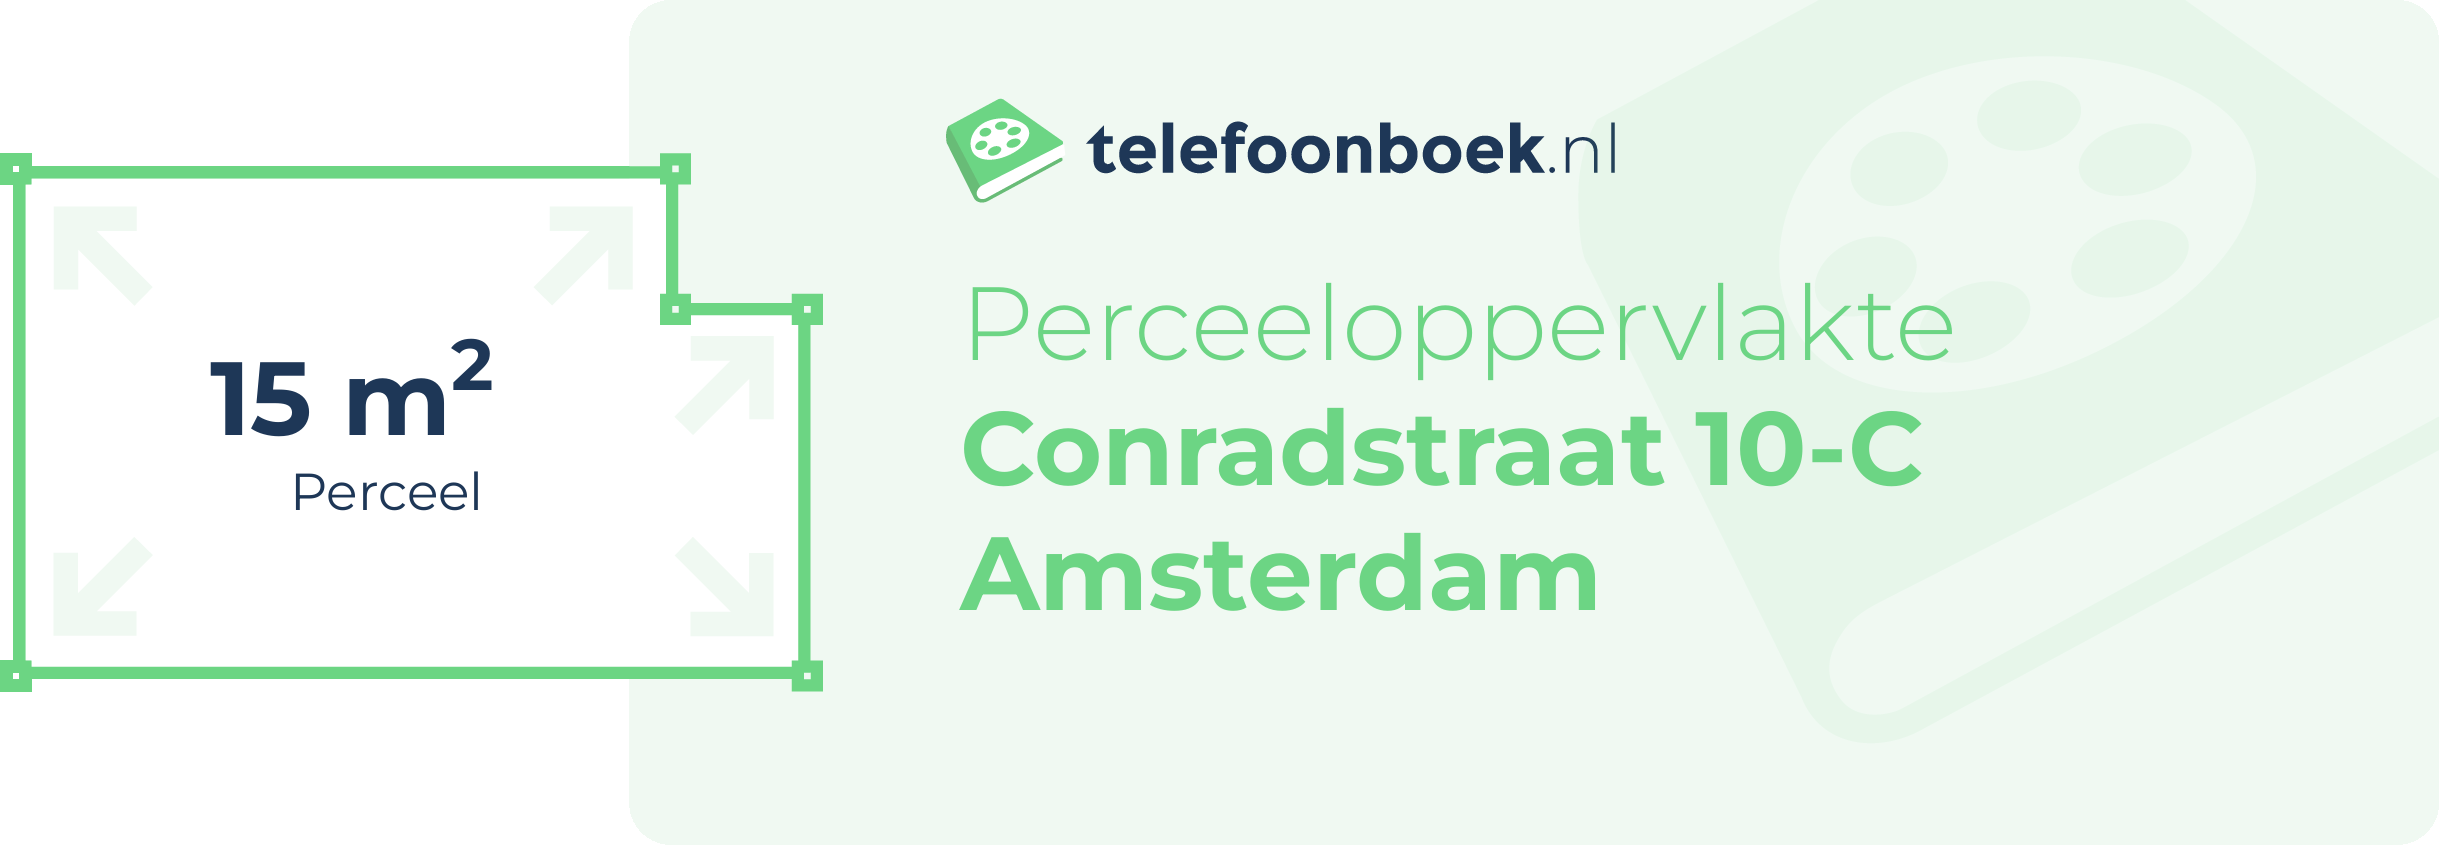 Perceeloppervlakte Conradstraat 10-C Amsterdam